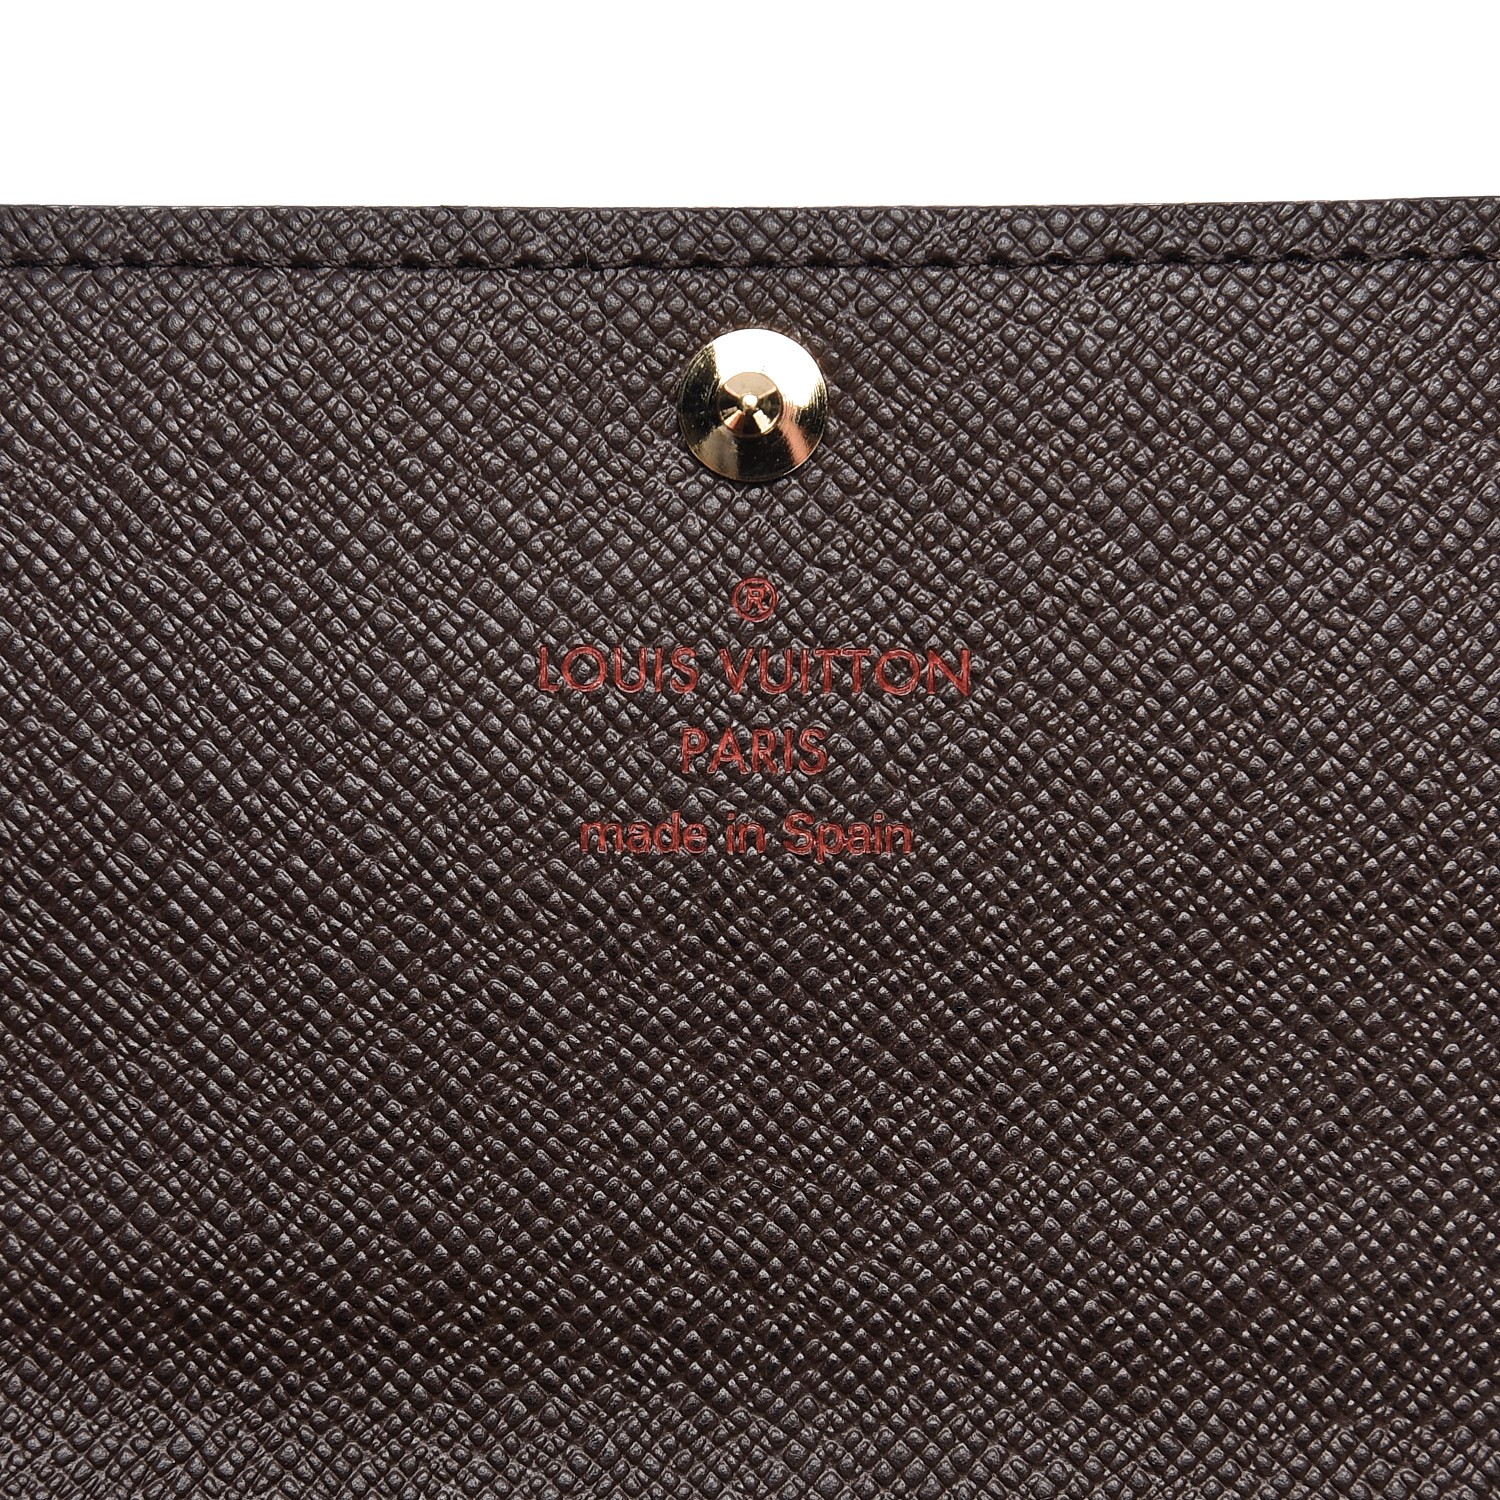 Louis Vuitton Damier Azur Anais Wallet N63241 Women's Damier Azur Wallet  (tri-fold) Damier Azur